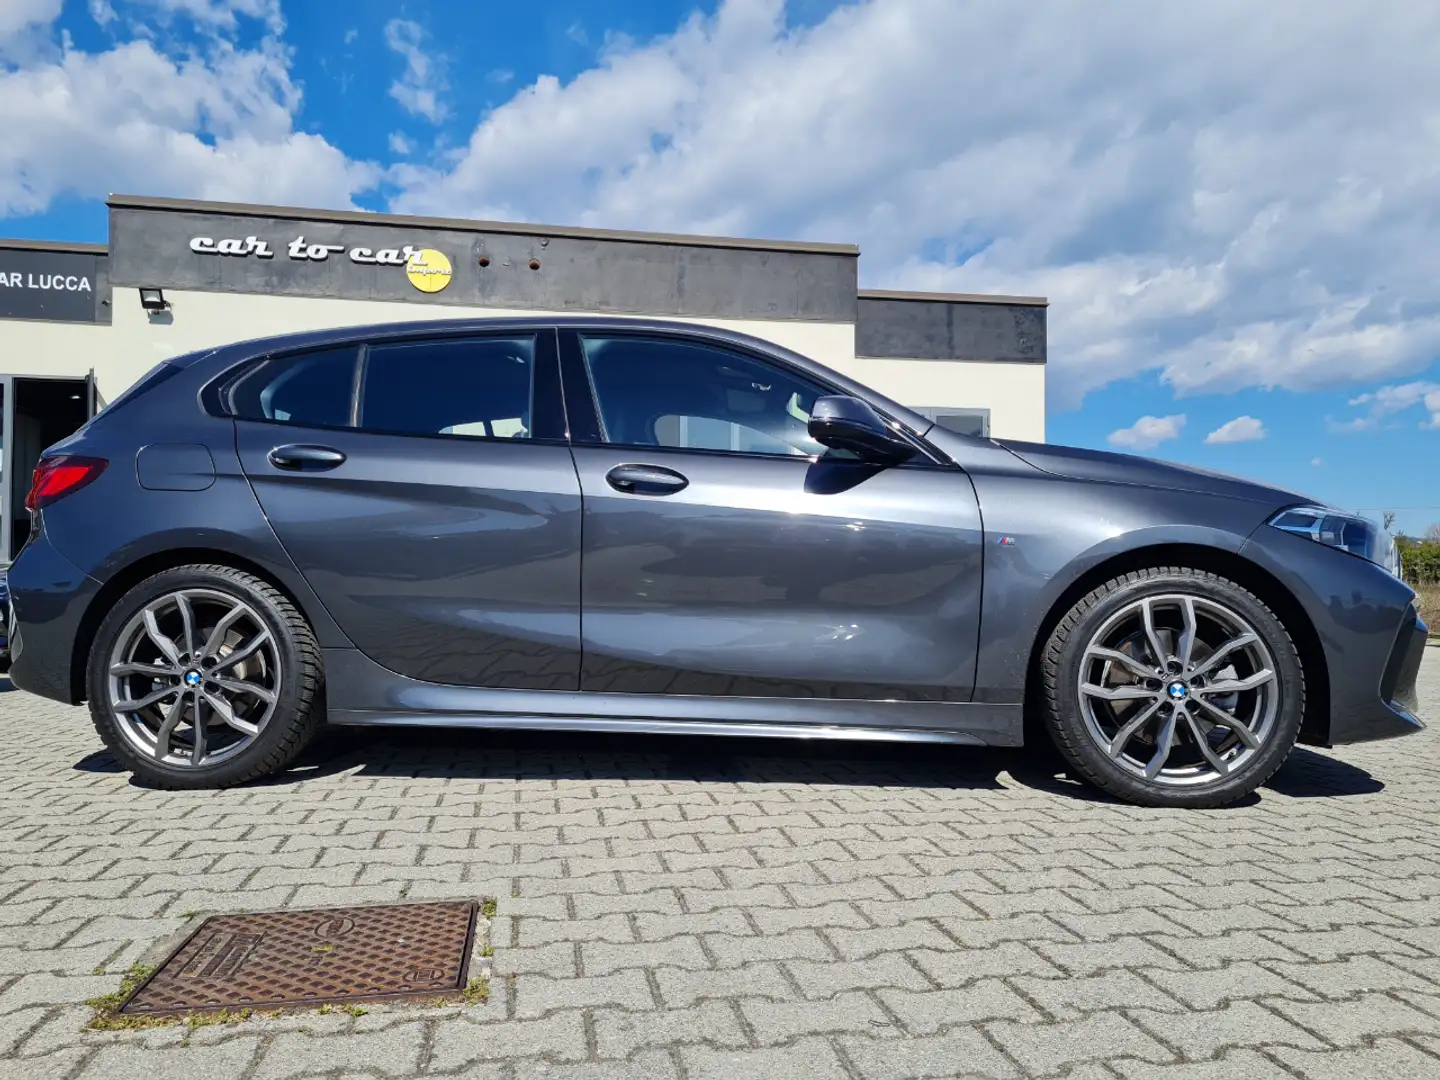 usato BMW 116 Berlina a Porcari - Lucca - Lu per € 28.000,-